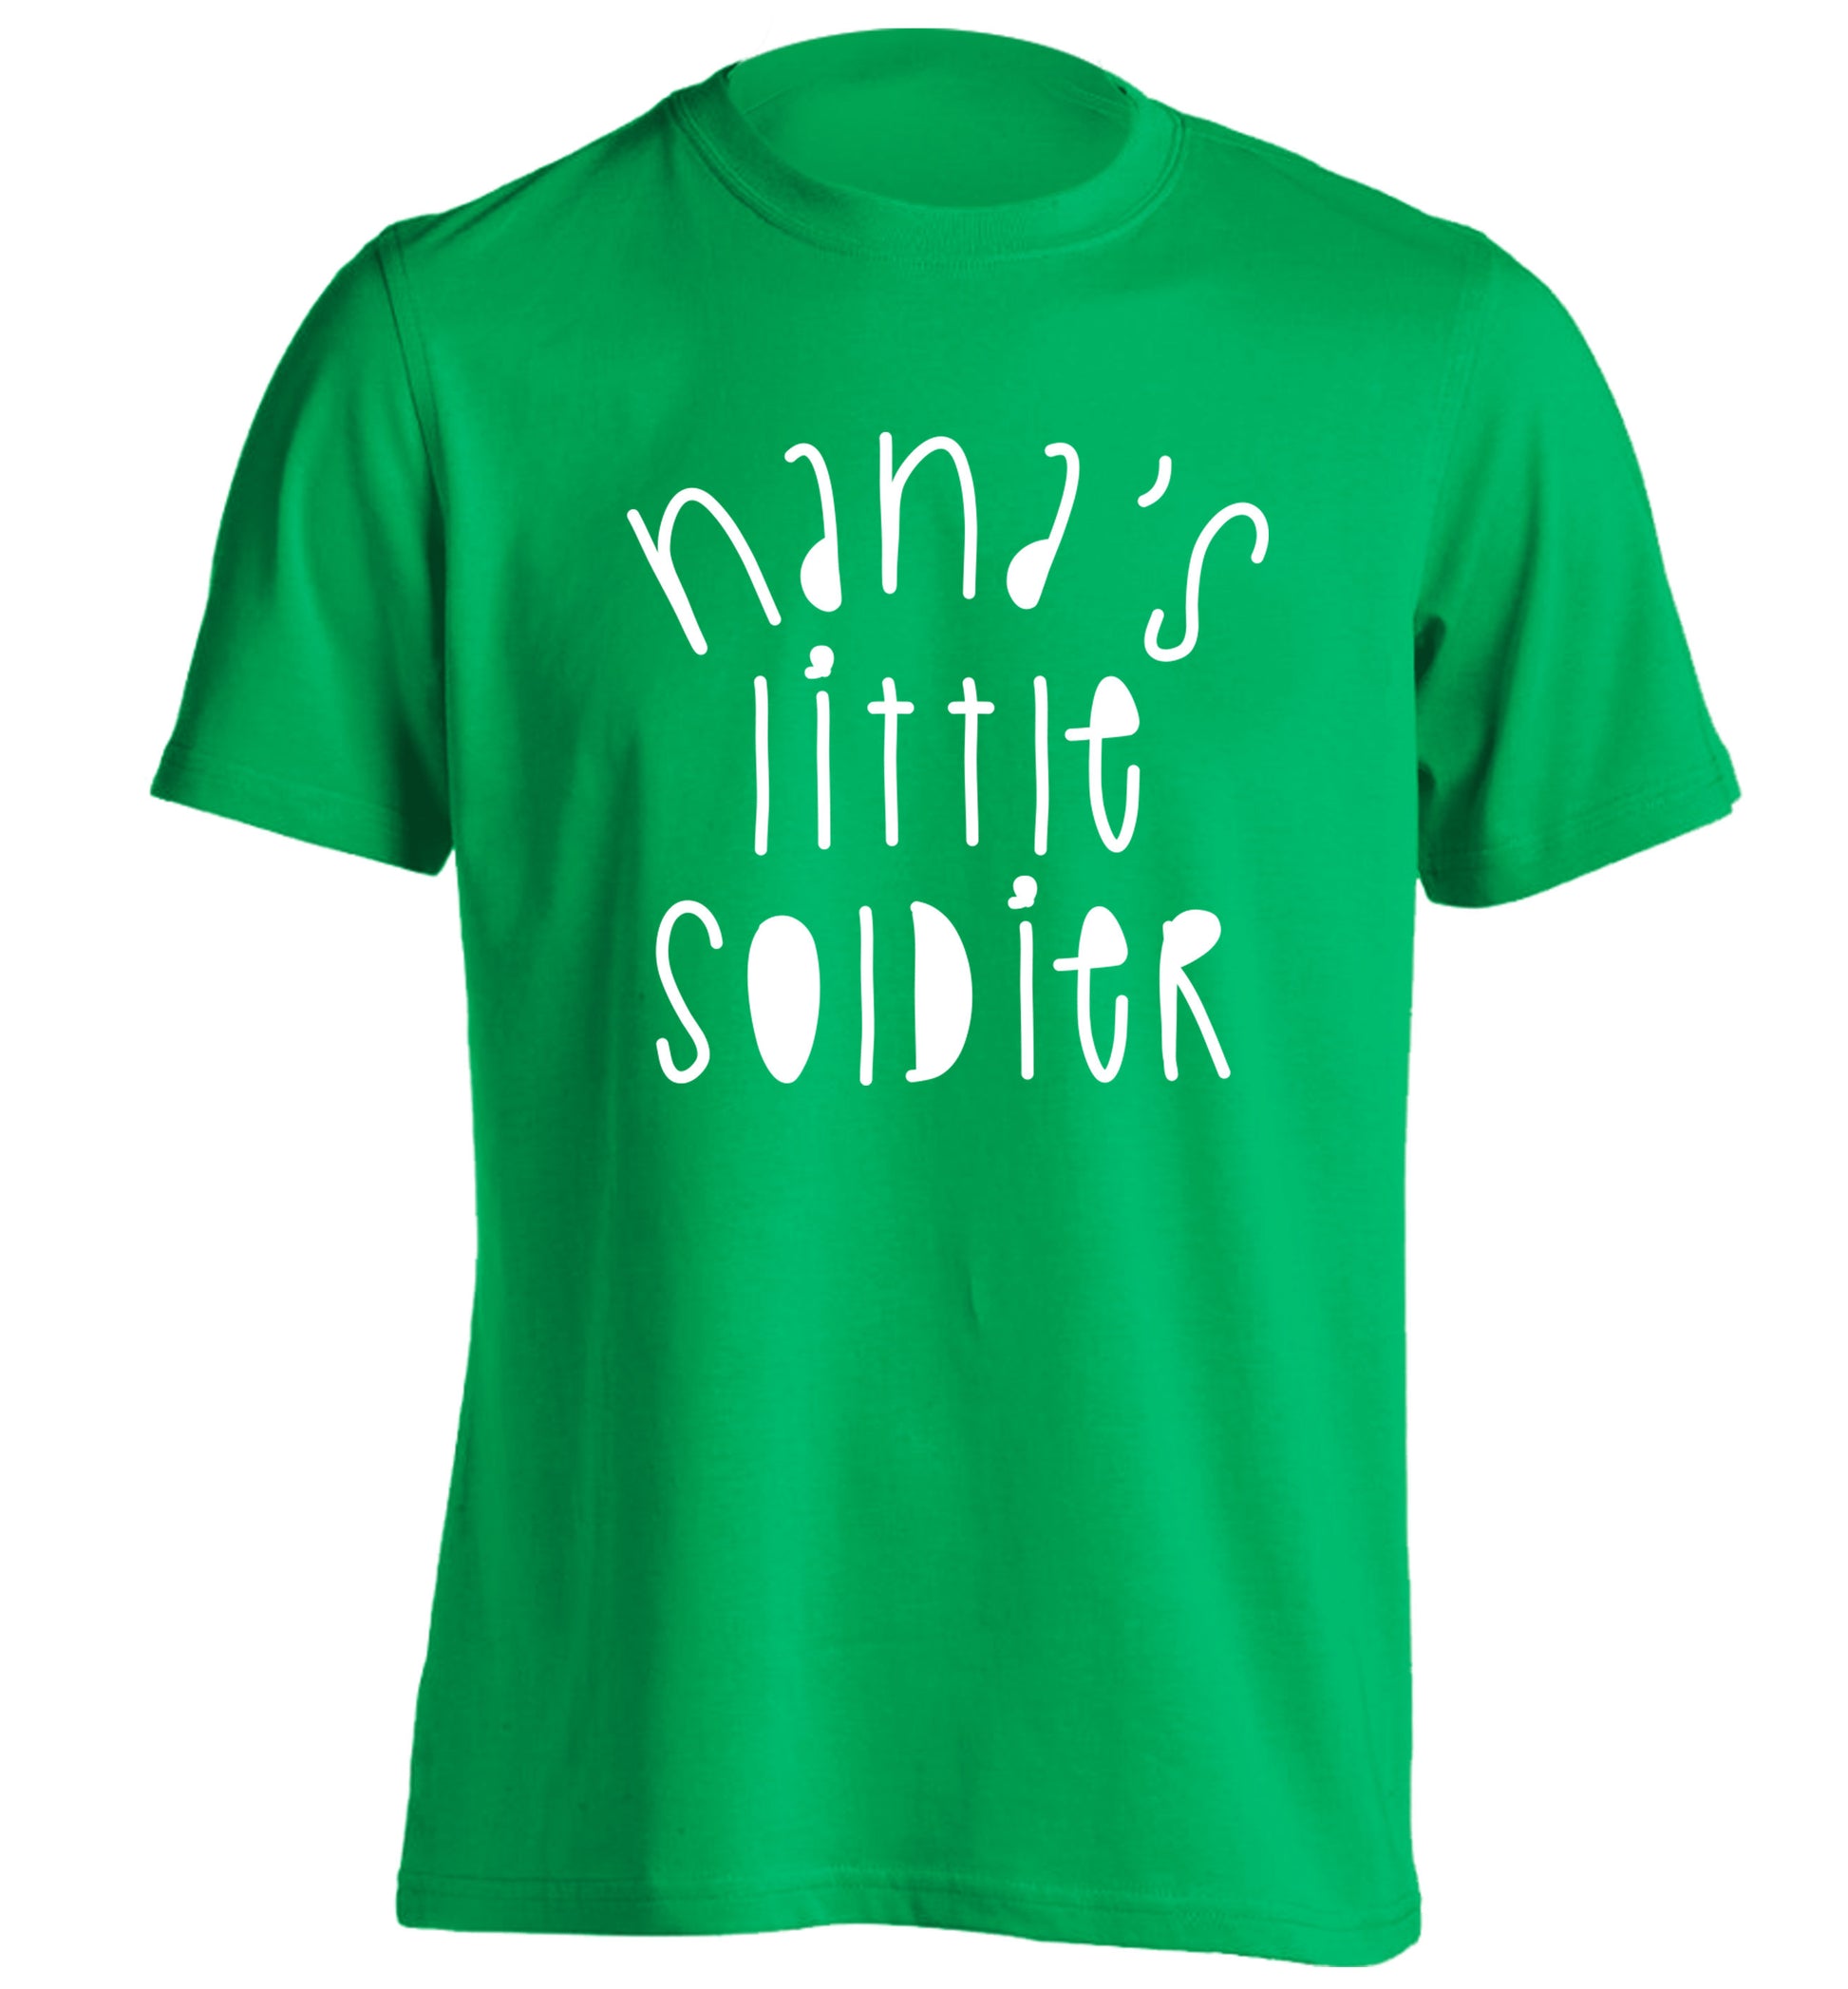 Nana's little soldier adults unisex green Tshirt 2XL